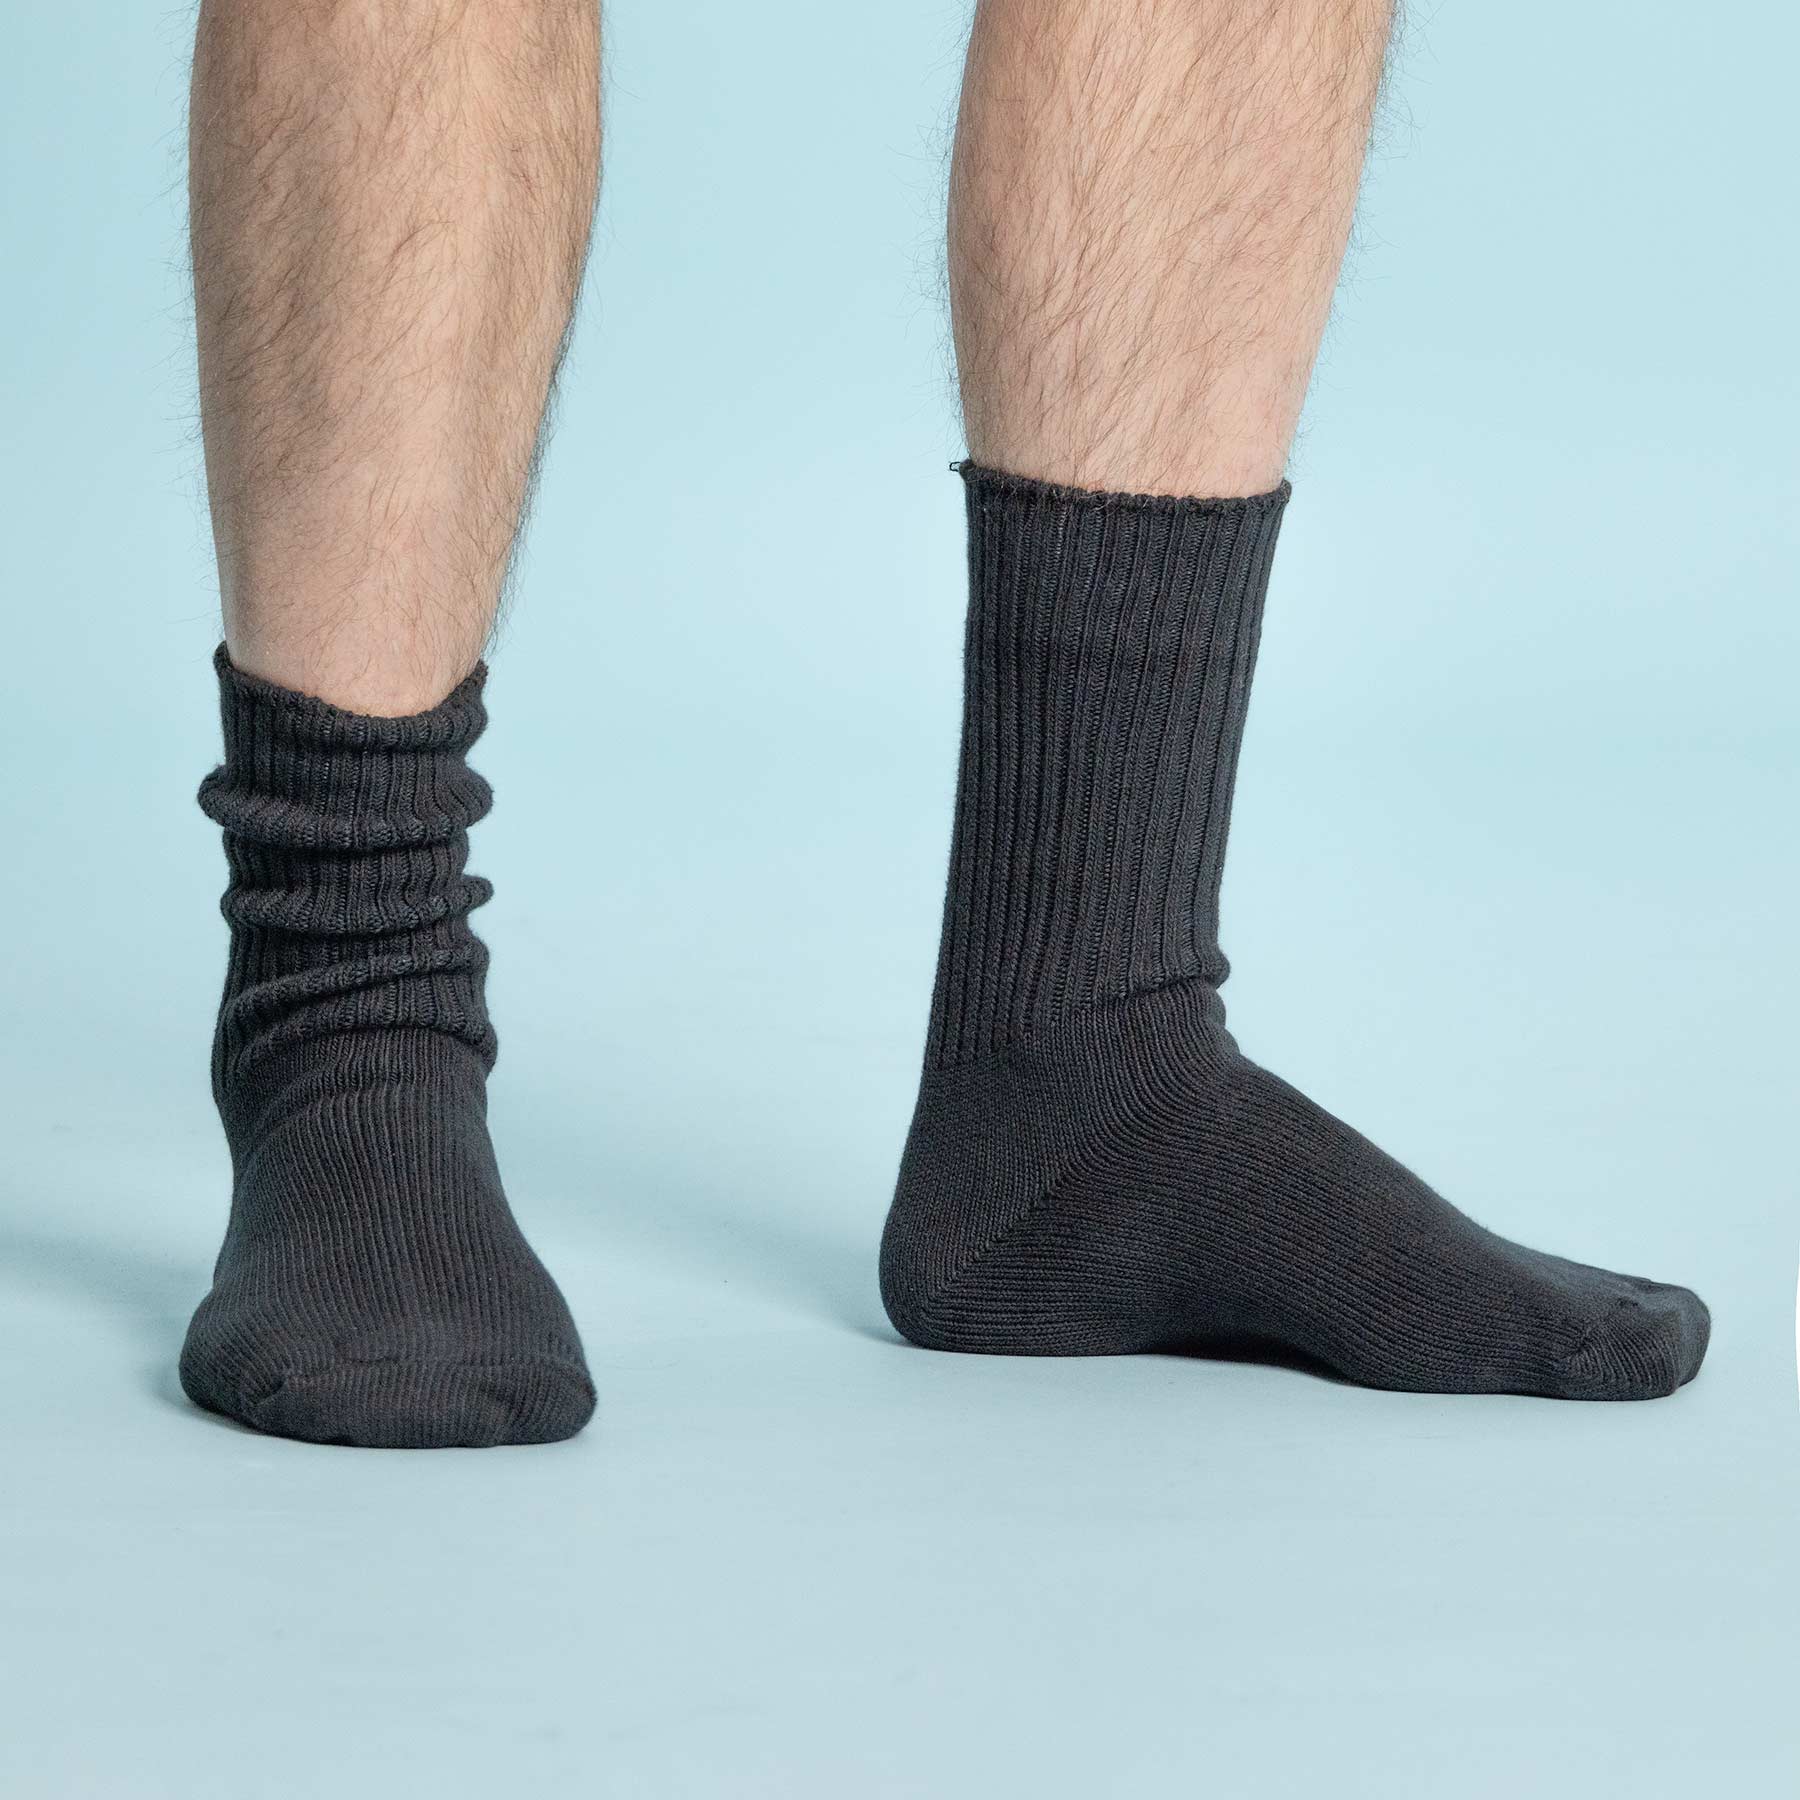 The Everyday Trouser Adult Socks - 98% Organic Cotton - Black, White, Navy